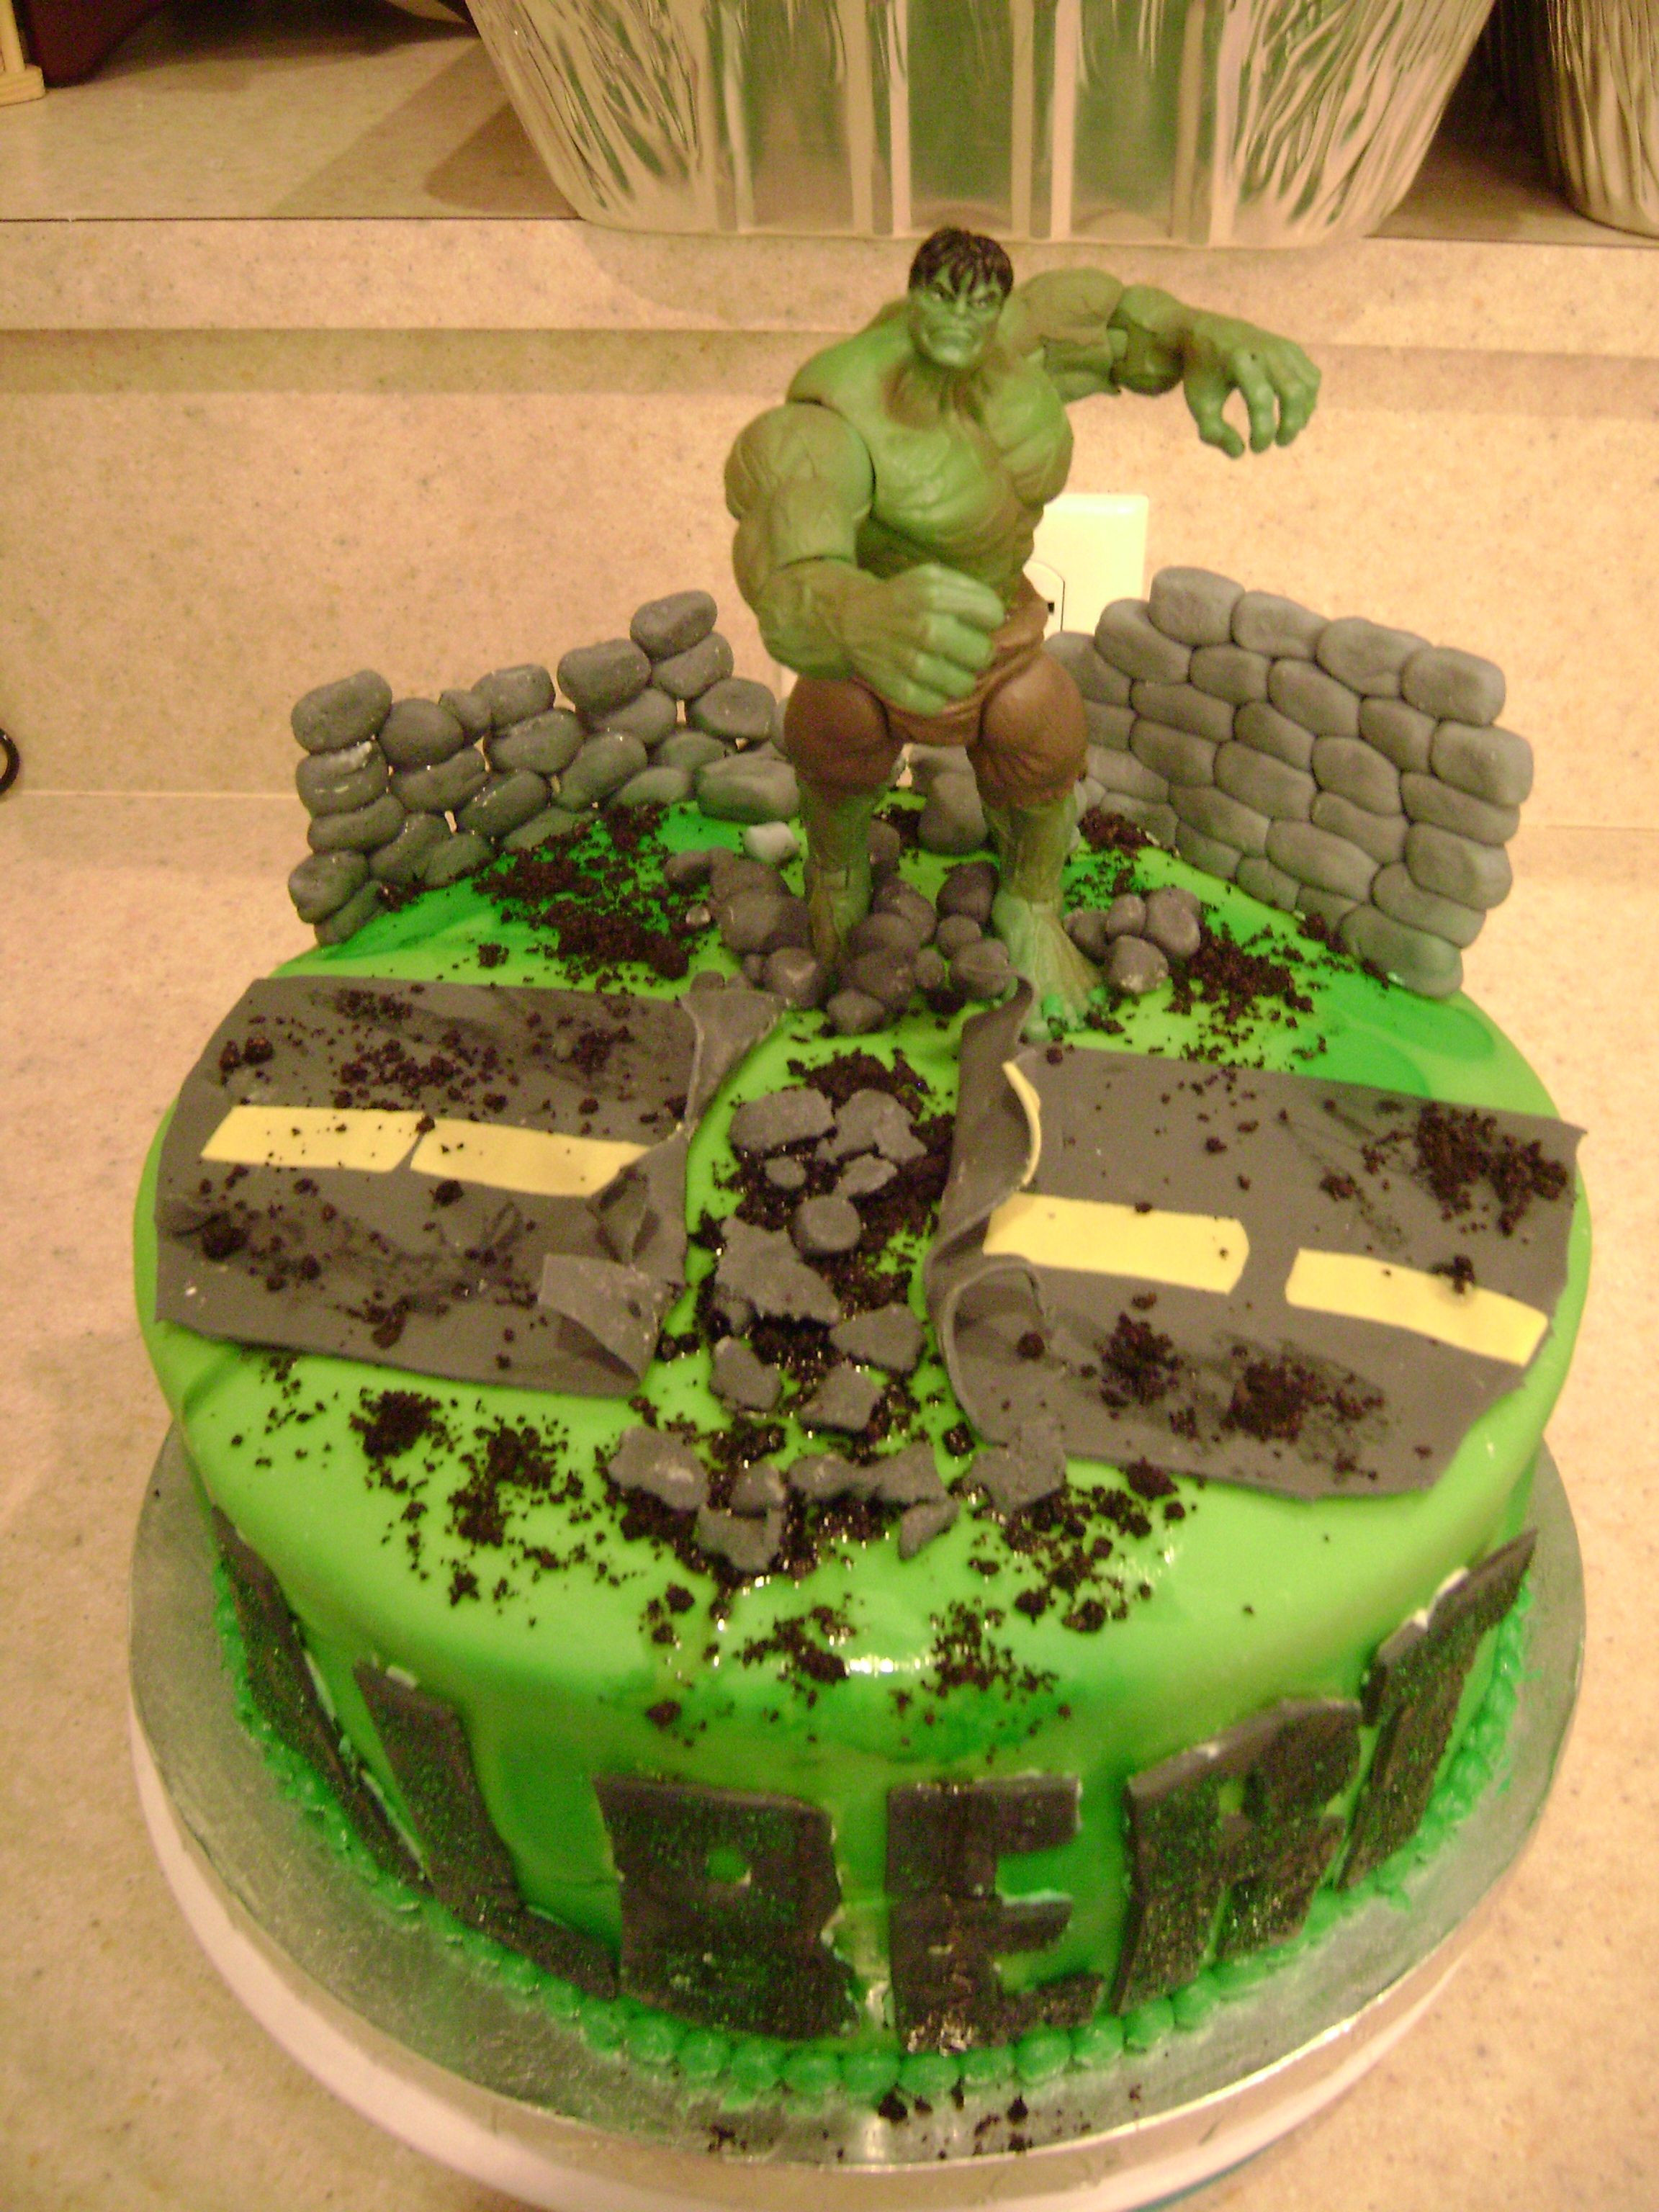 Best ideas about Hulk Birthday Cake
. Save or Pin Hulk Birthday Cakes on Pinterest Now.